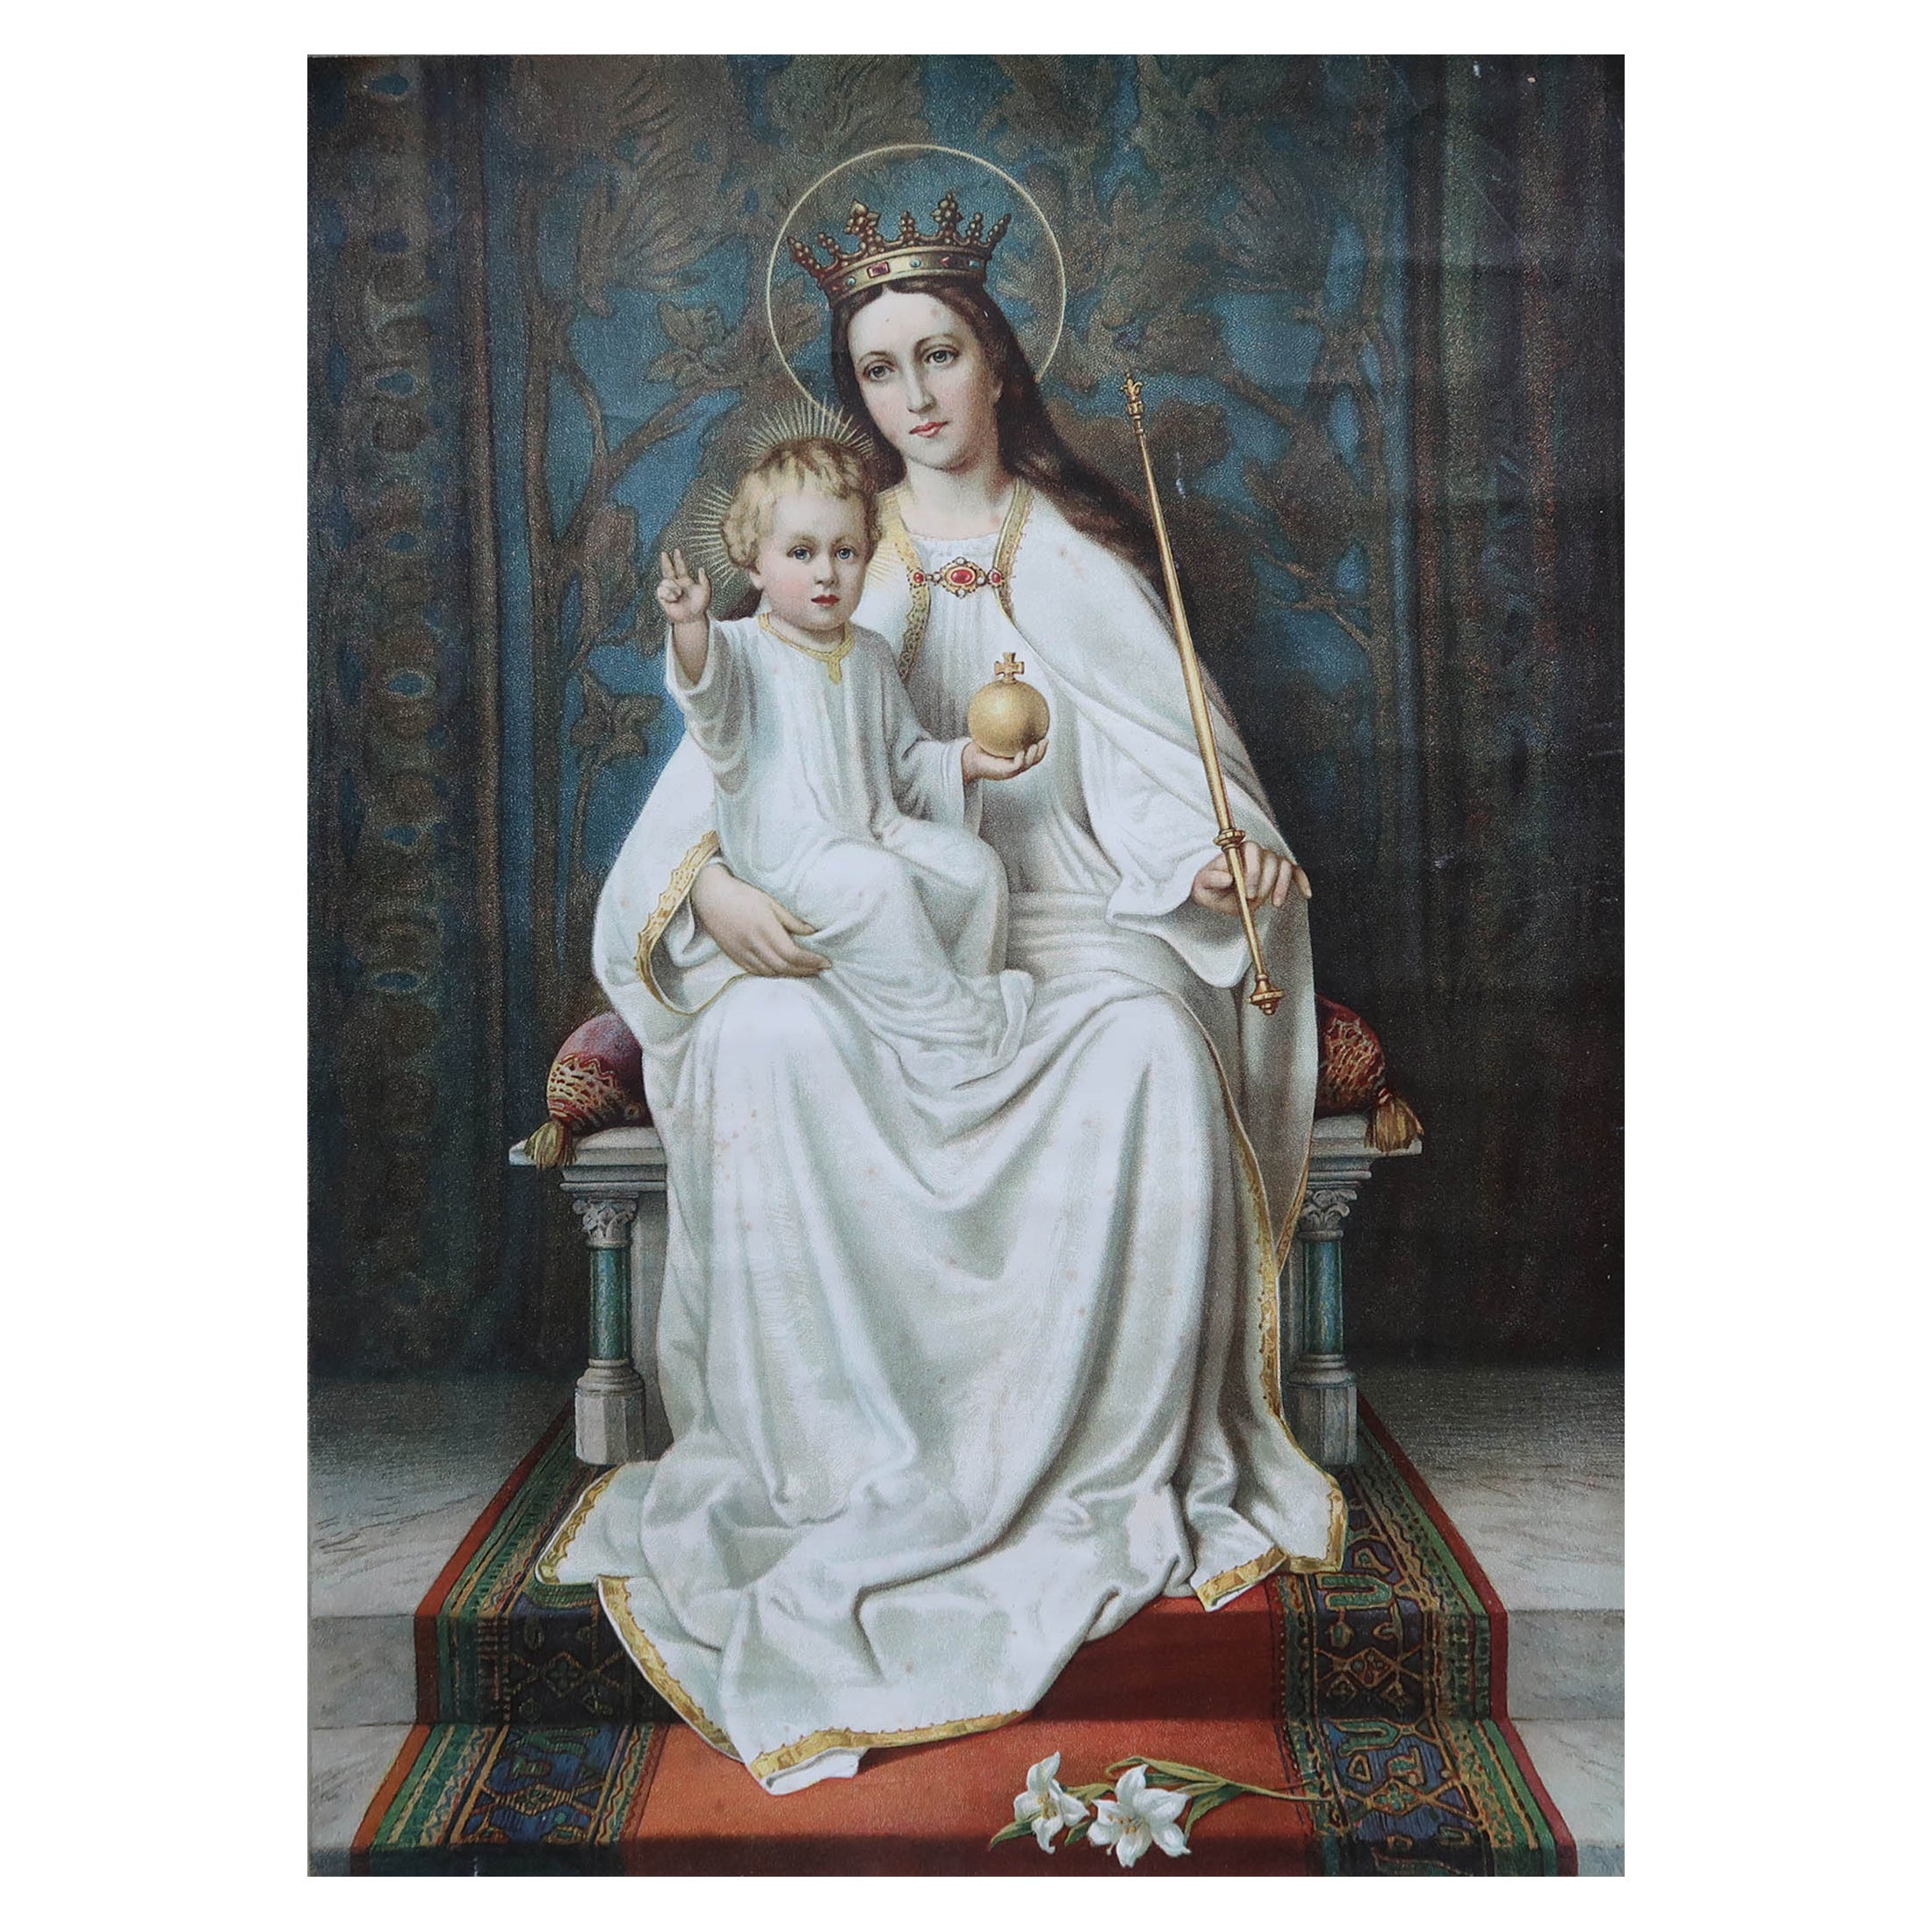 Grande estampe ancienne originale de la Madonna et du Child, vers 1900